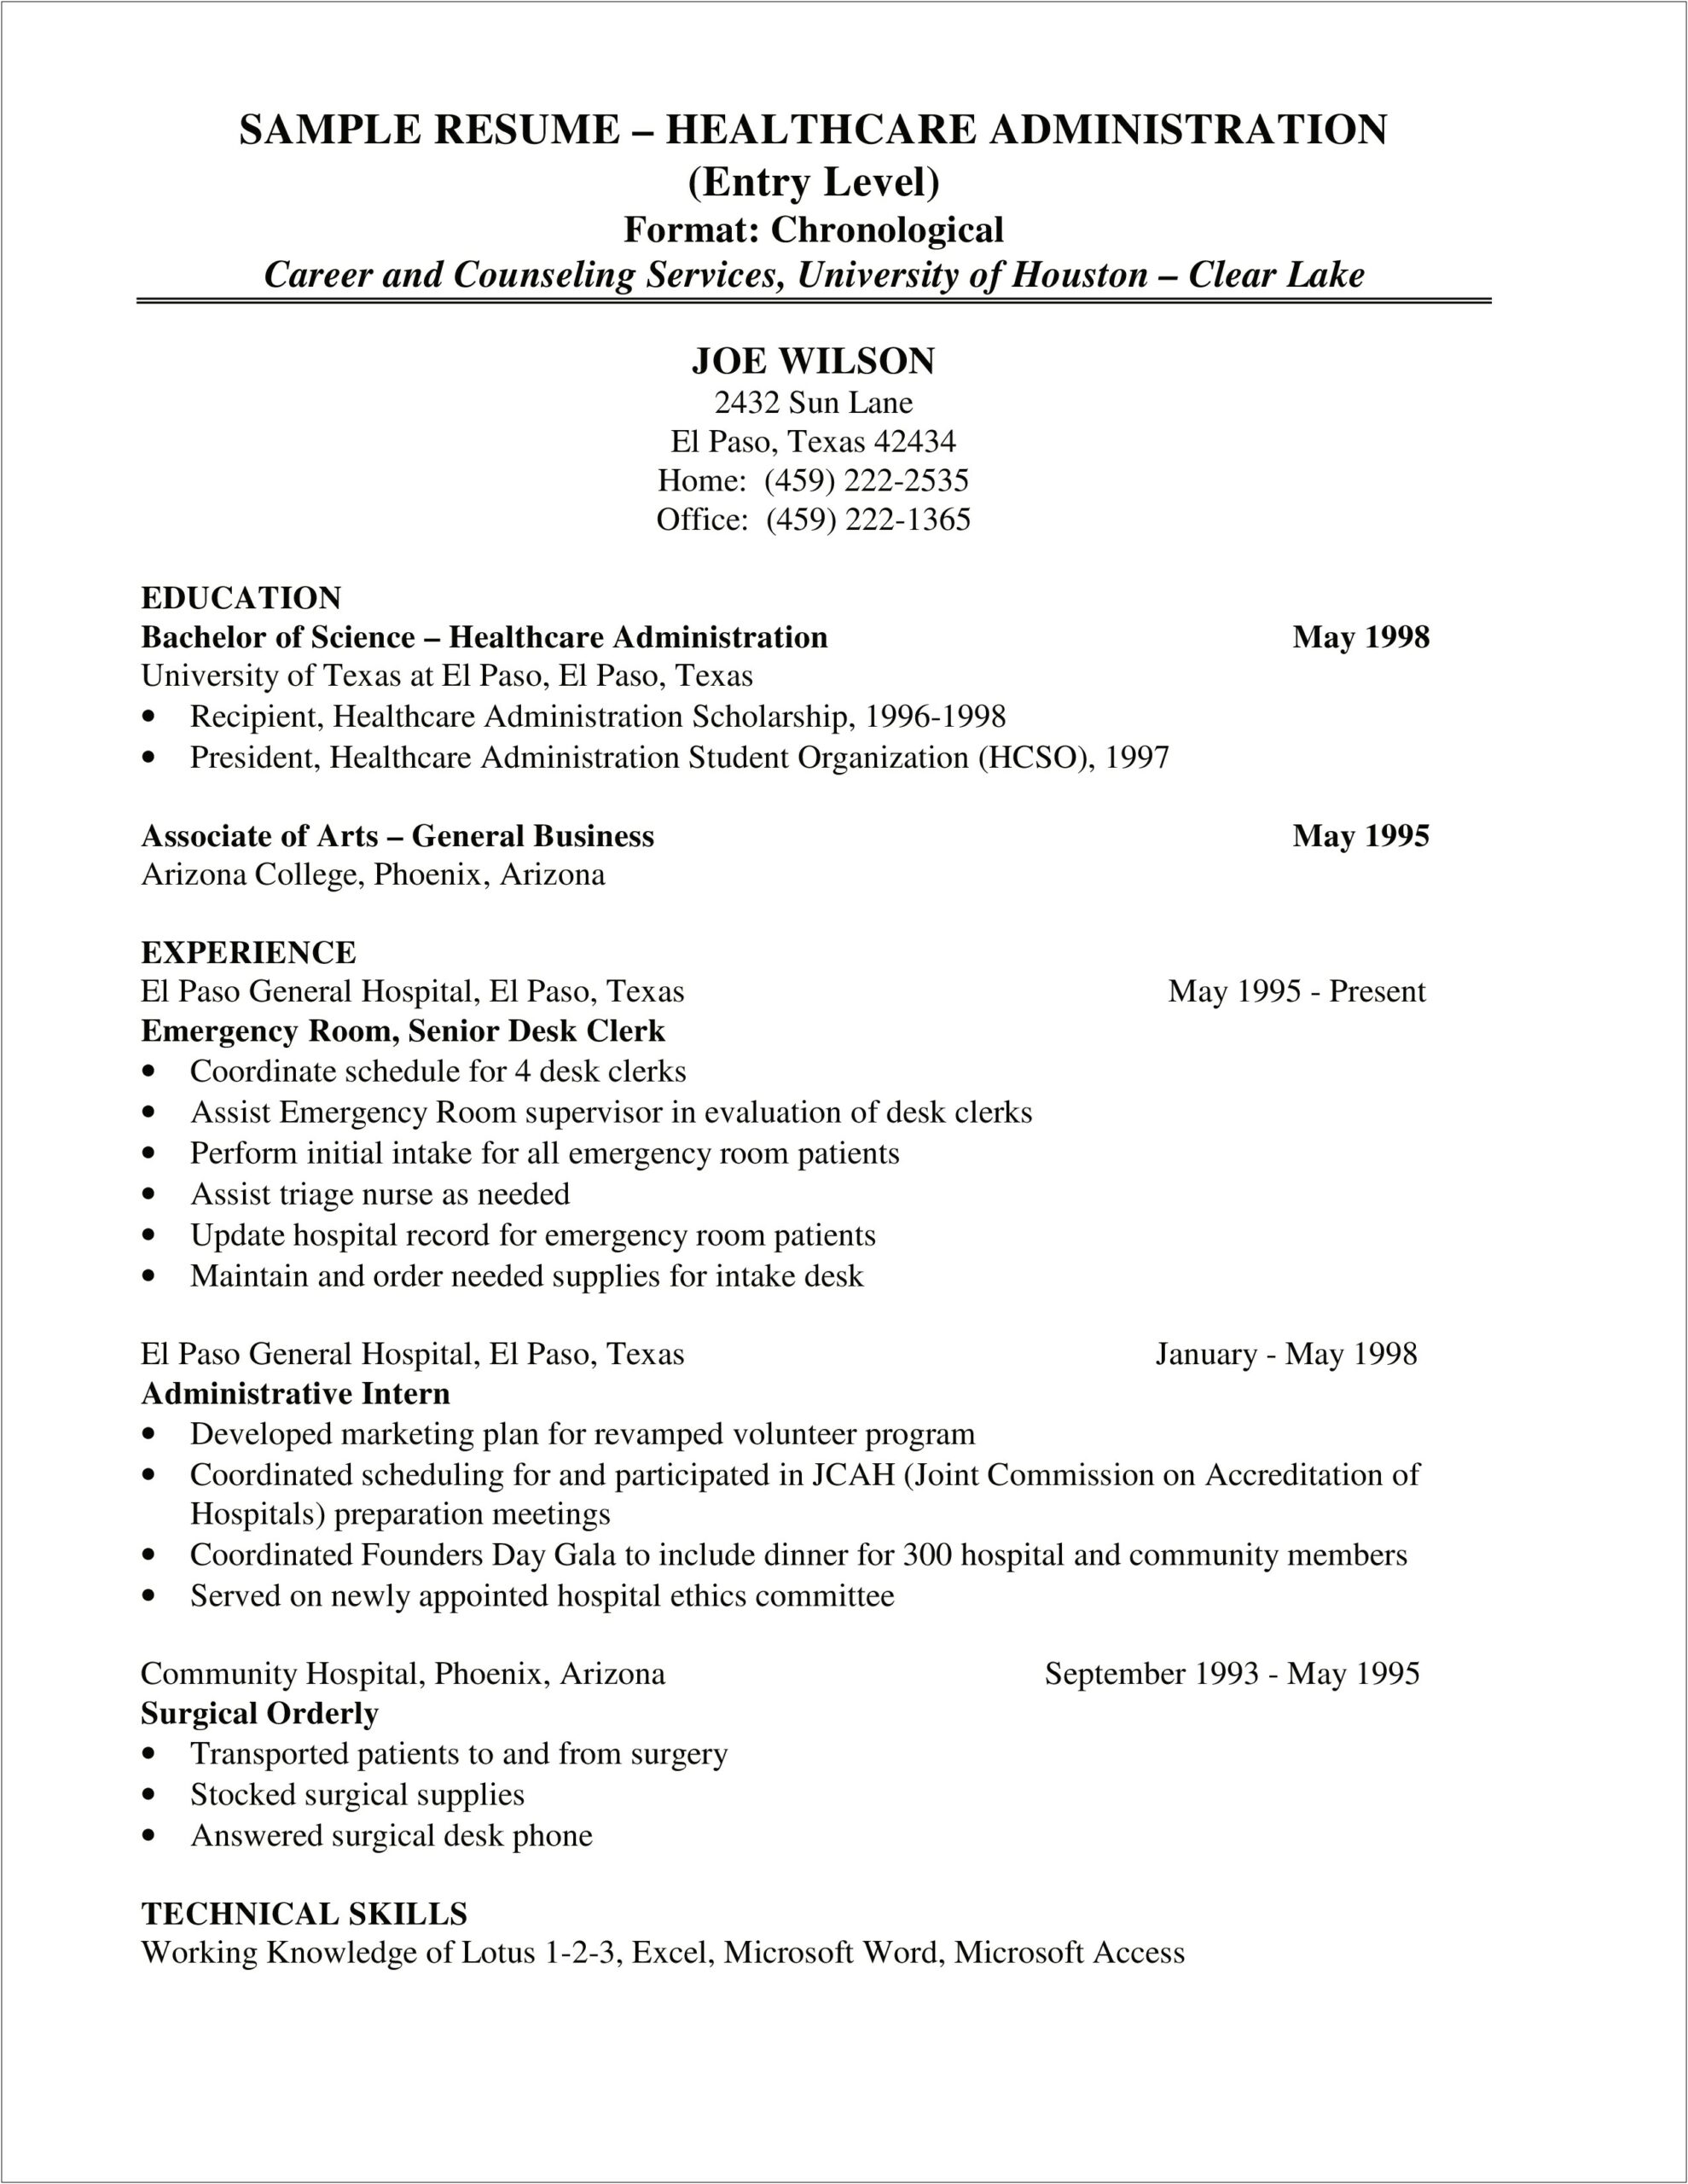 Skills Of Healthcare Administrator Resume